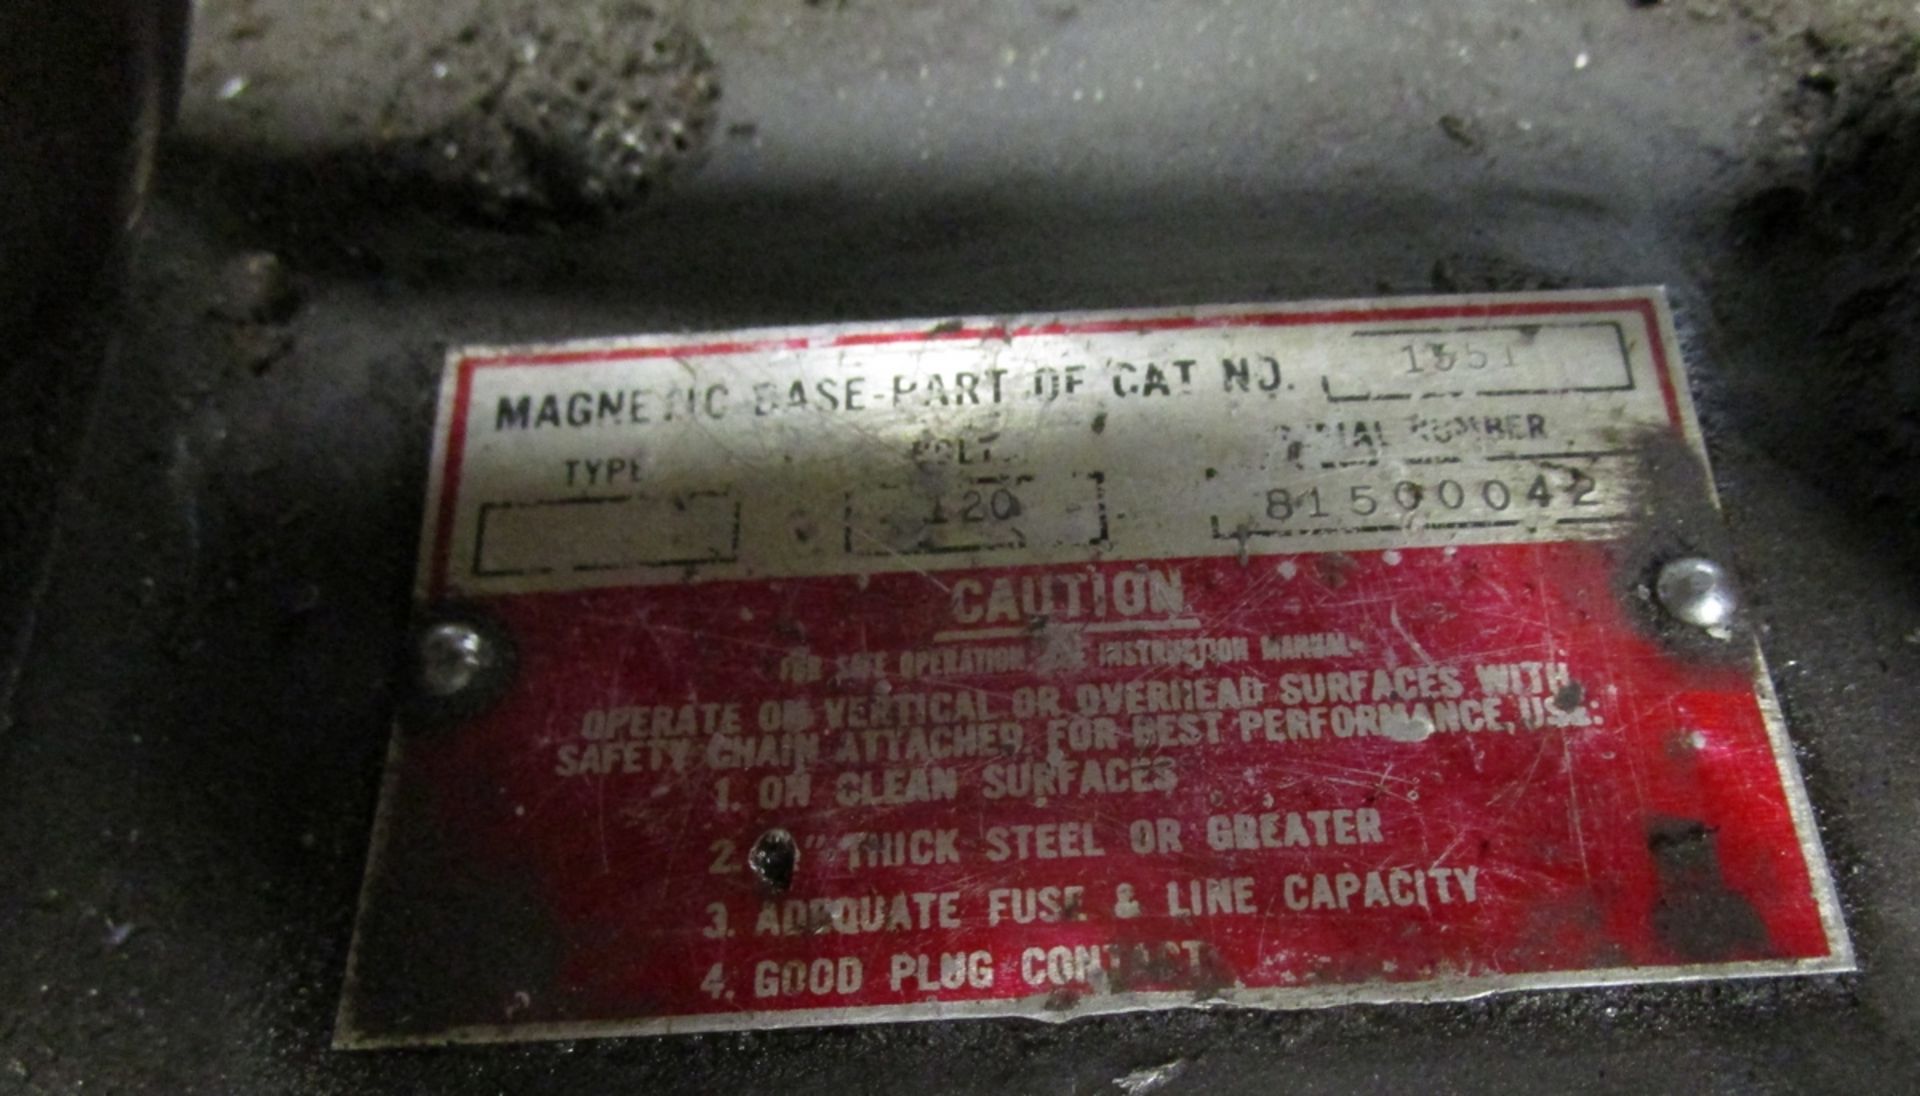 Black & Decker 1551 Magnetic Base Drill Press - Image 3 of 3